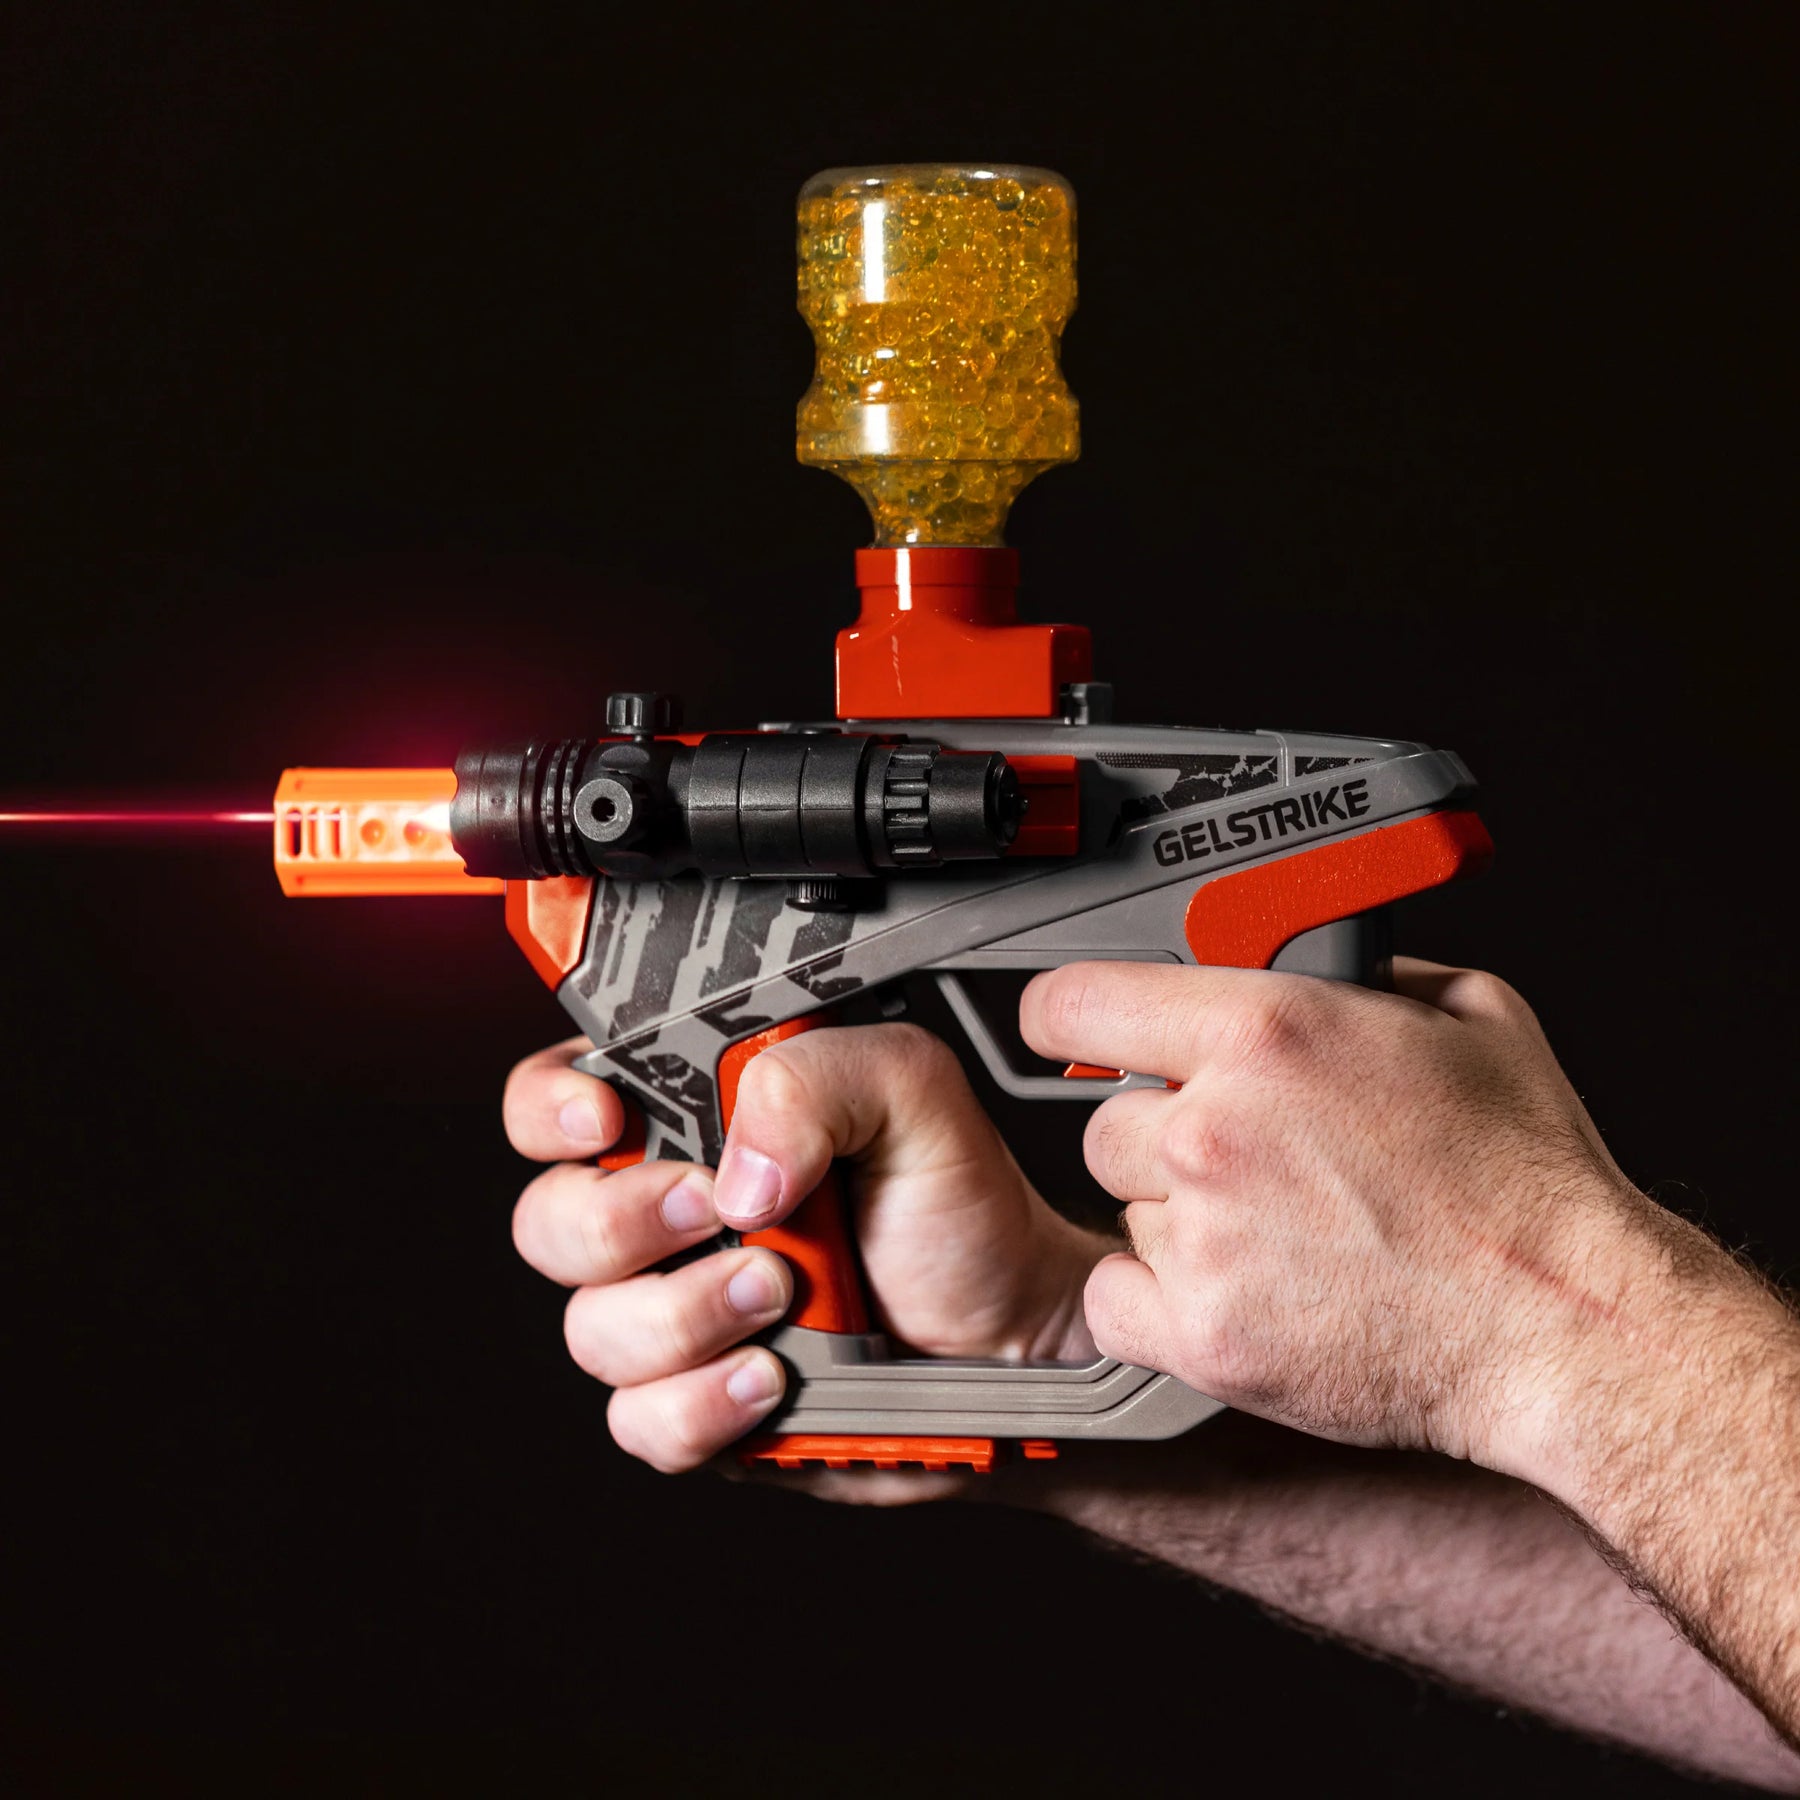 Gellyball kit with Laser | Delta Blaster | Gelstrike | Color: Lava Red